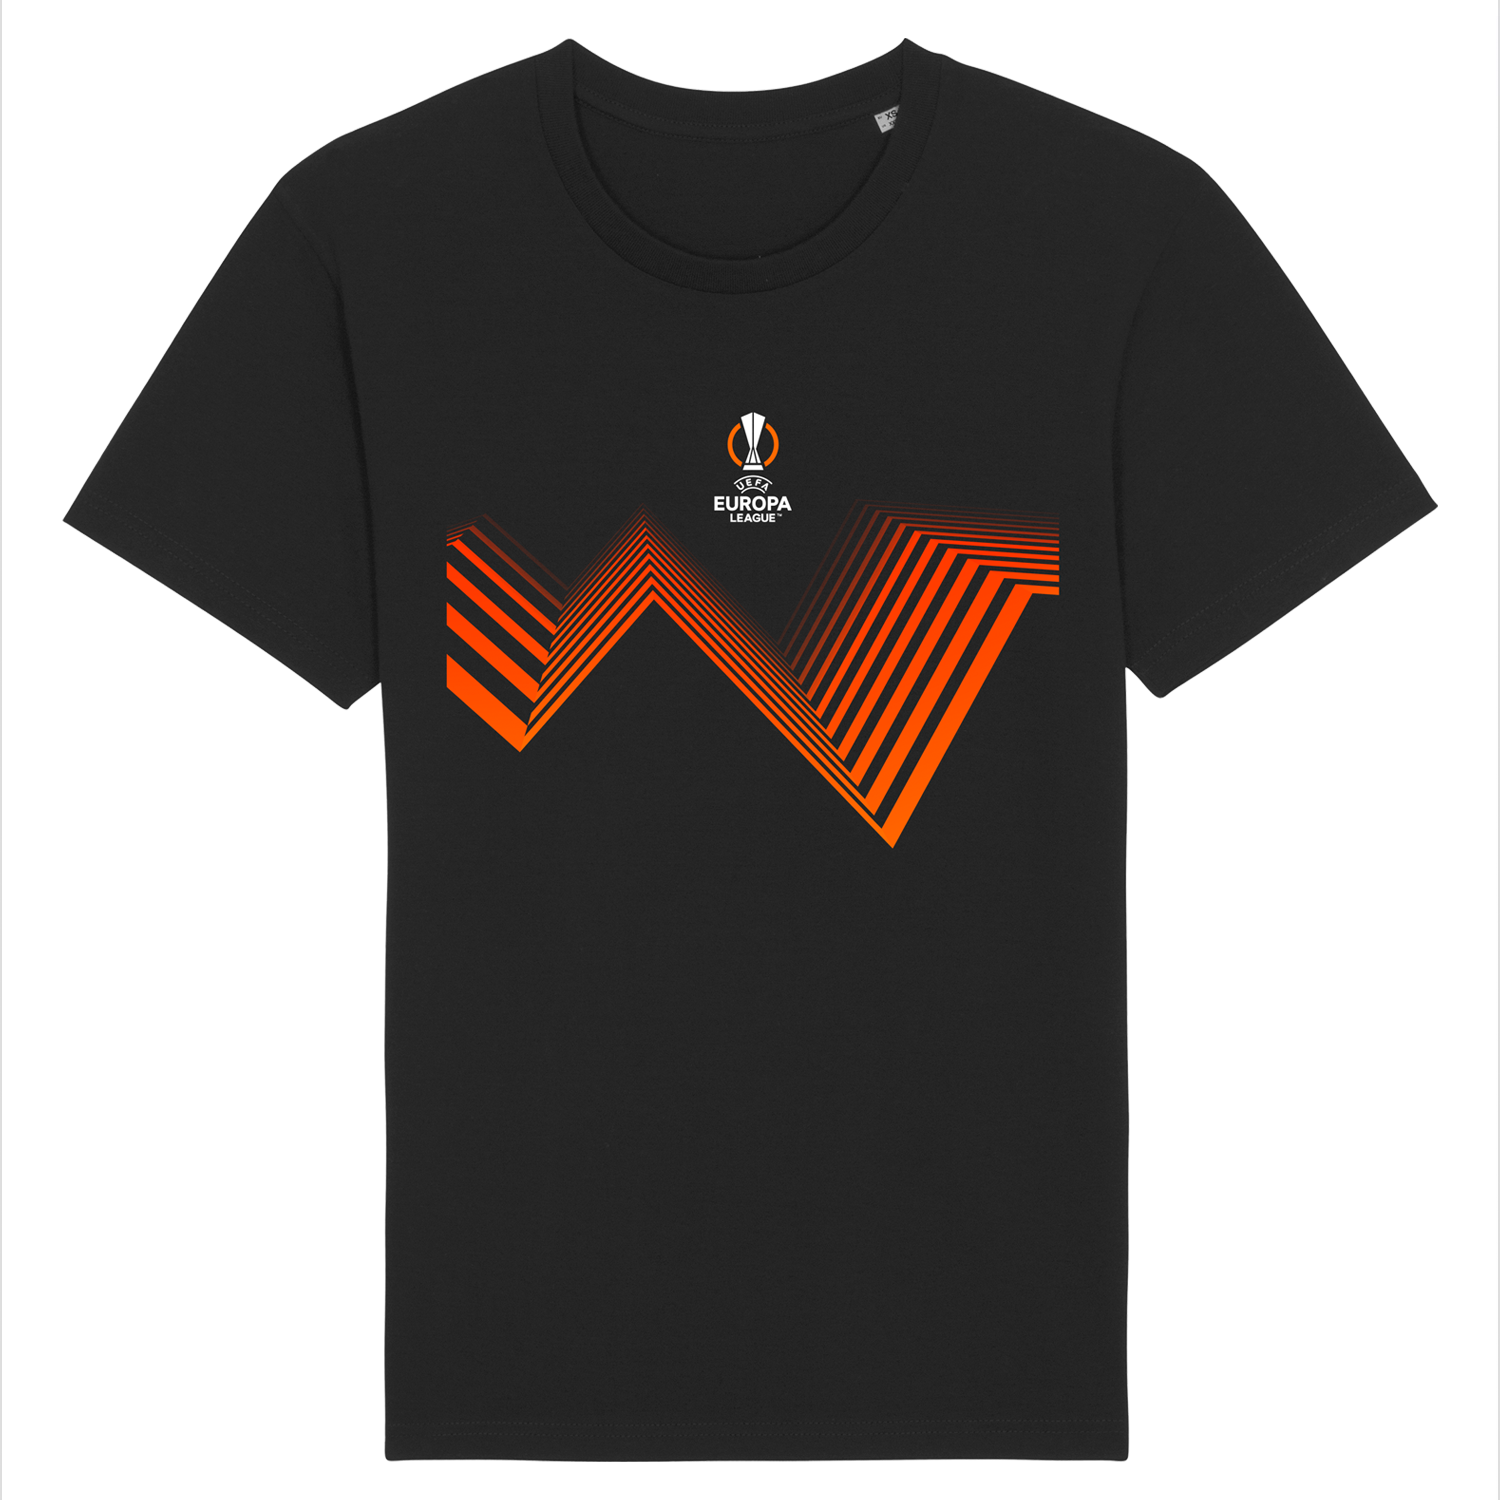 UEFA Europa League - Energy Wave Black T-Shirt UEFA Club Competitions Online Store